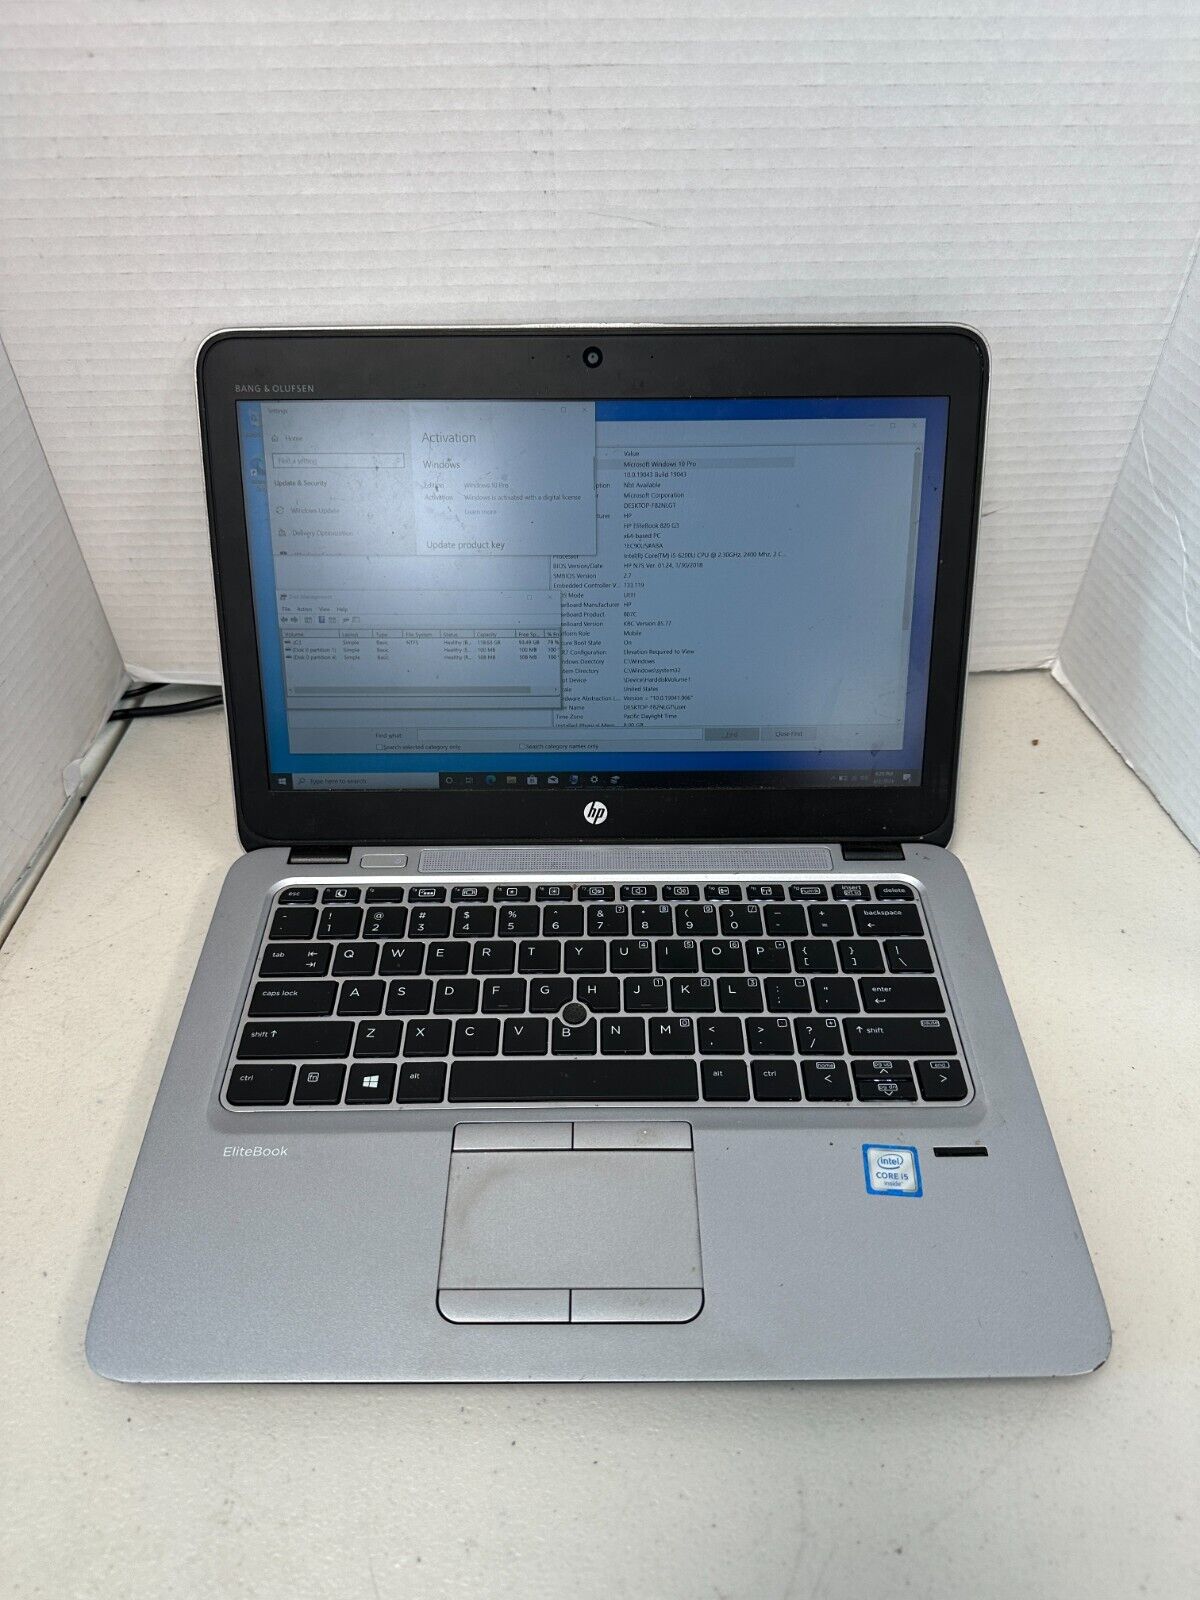 HP EliteBook 820 G3 i5-6200 @ 2.3GHz, 8GB RAM, 120 GB SSD, NO AC #04